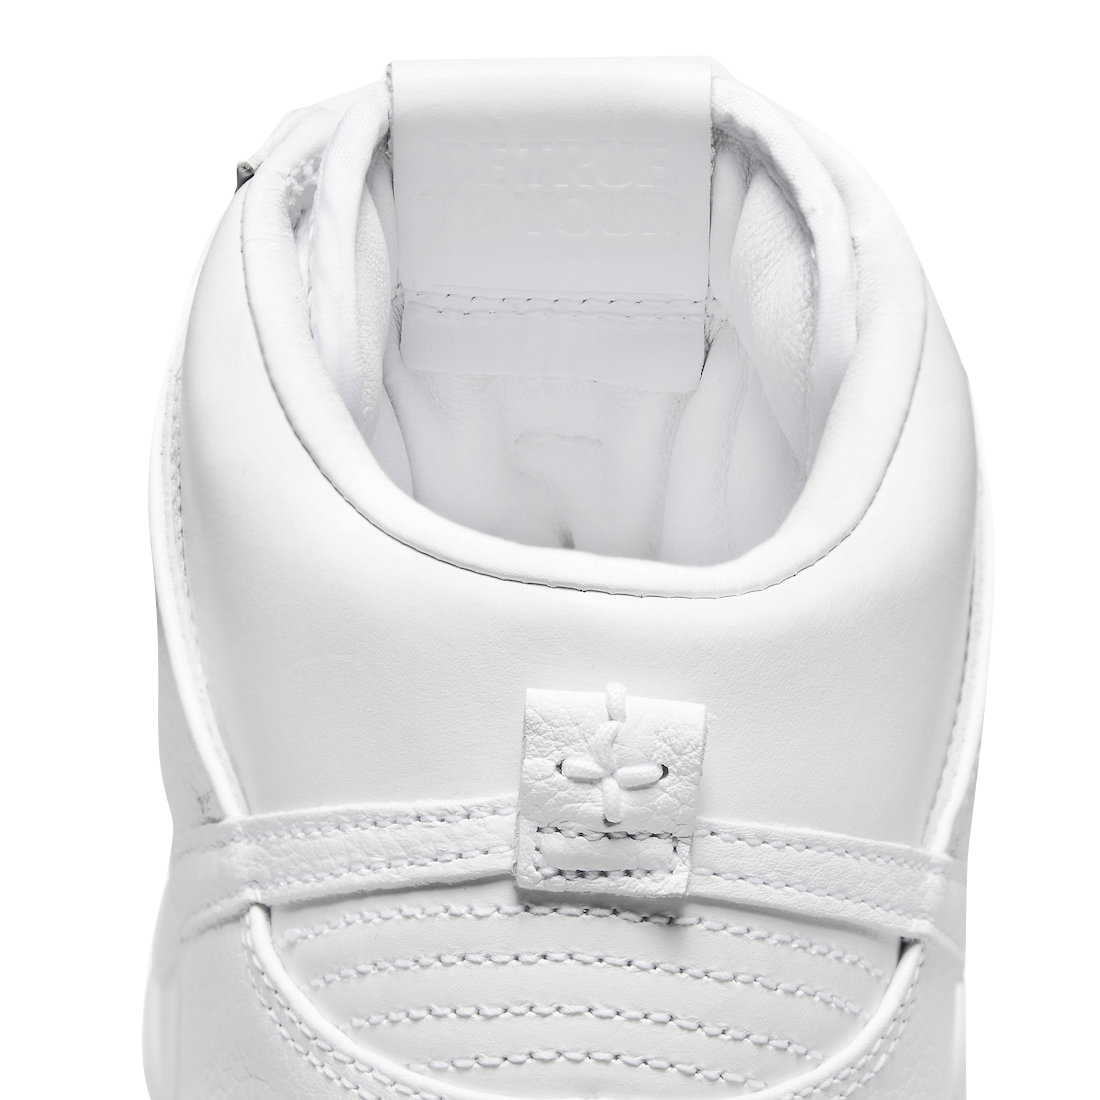 BUY Nike Dunk High Woven White | Kixify Marketplace